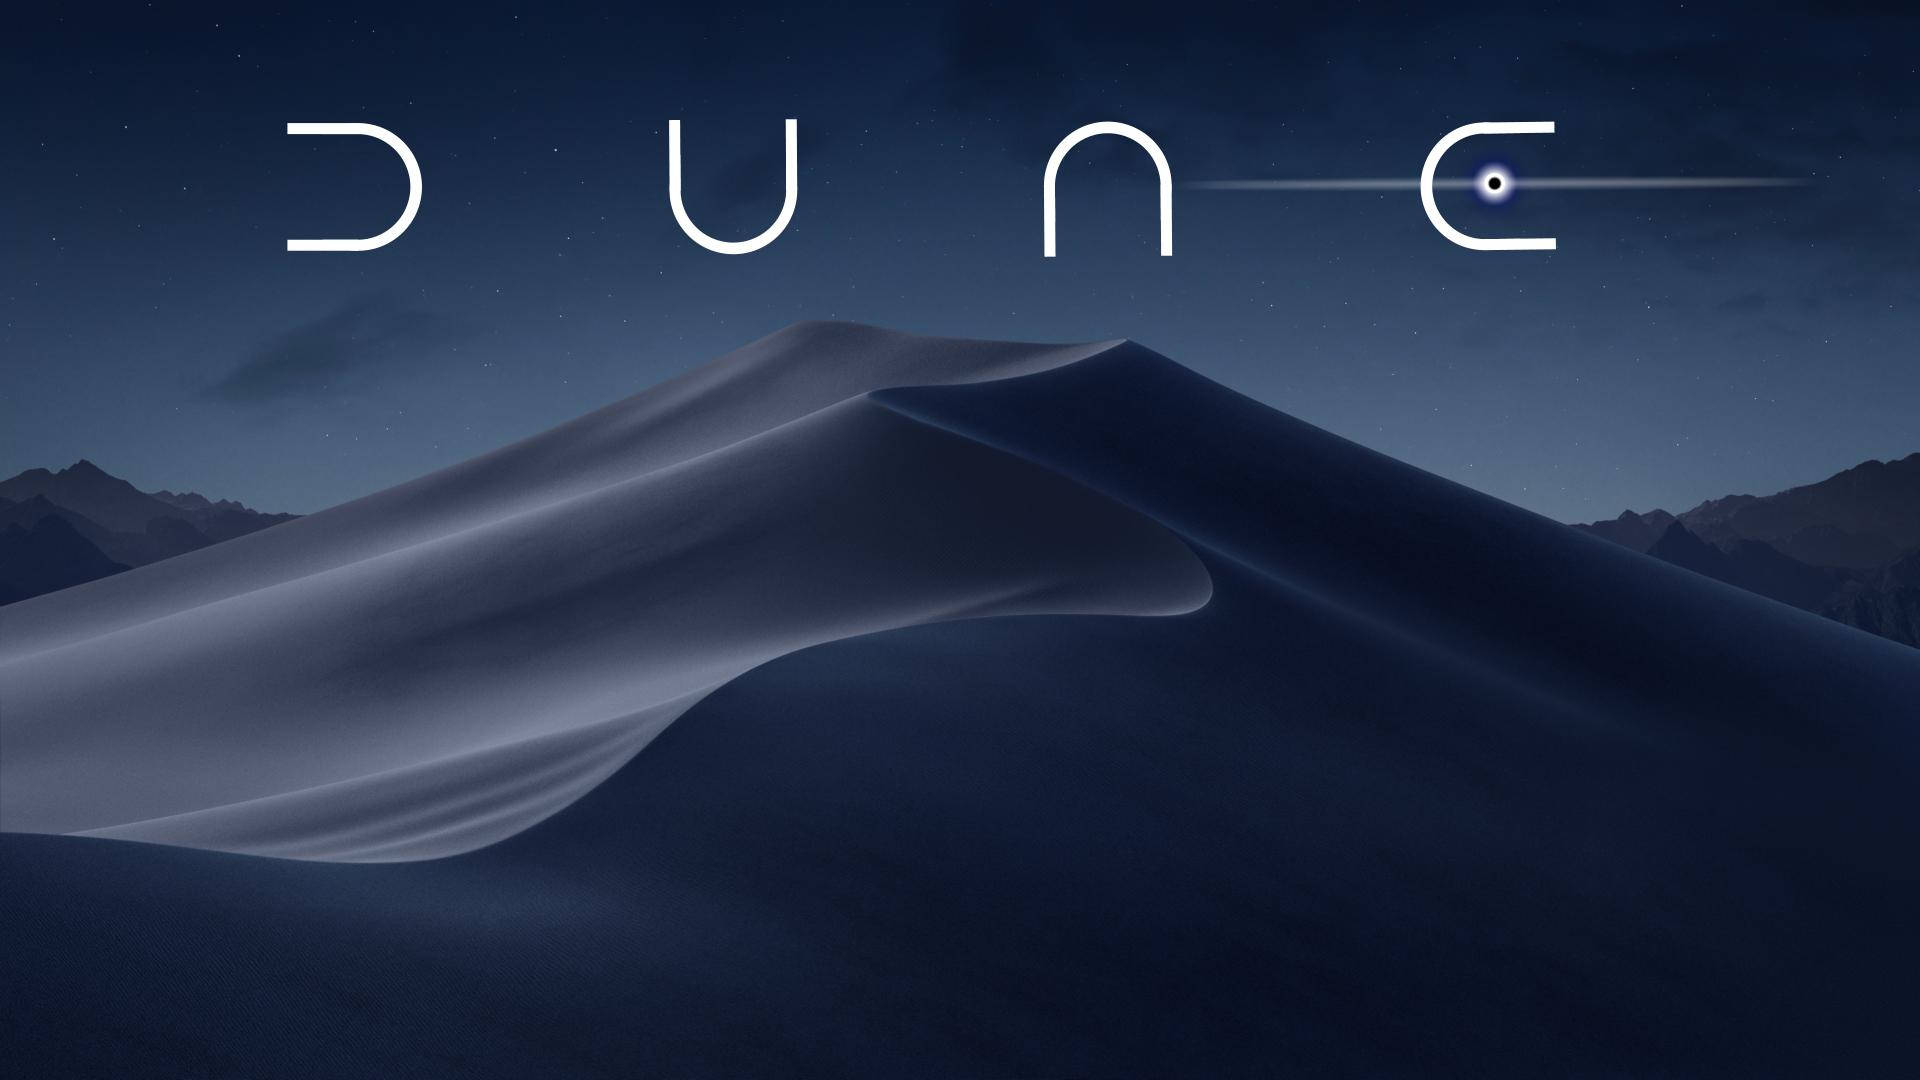 Portadadel Desierto Espacial De La Película Dune. Fondo de pantalla